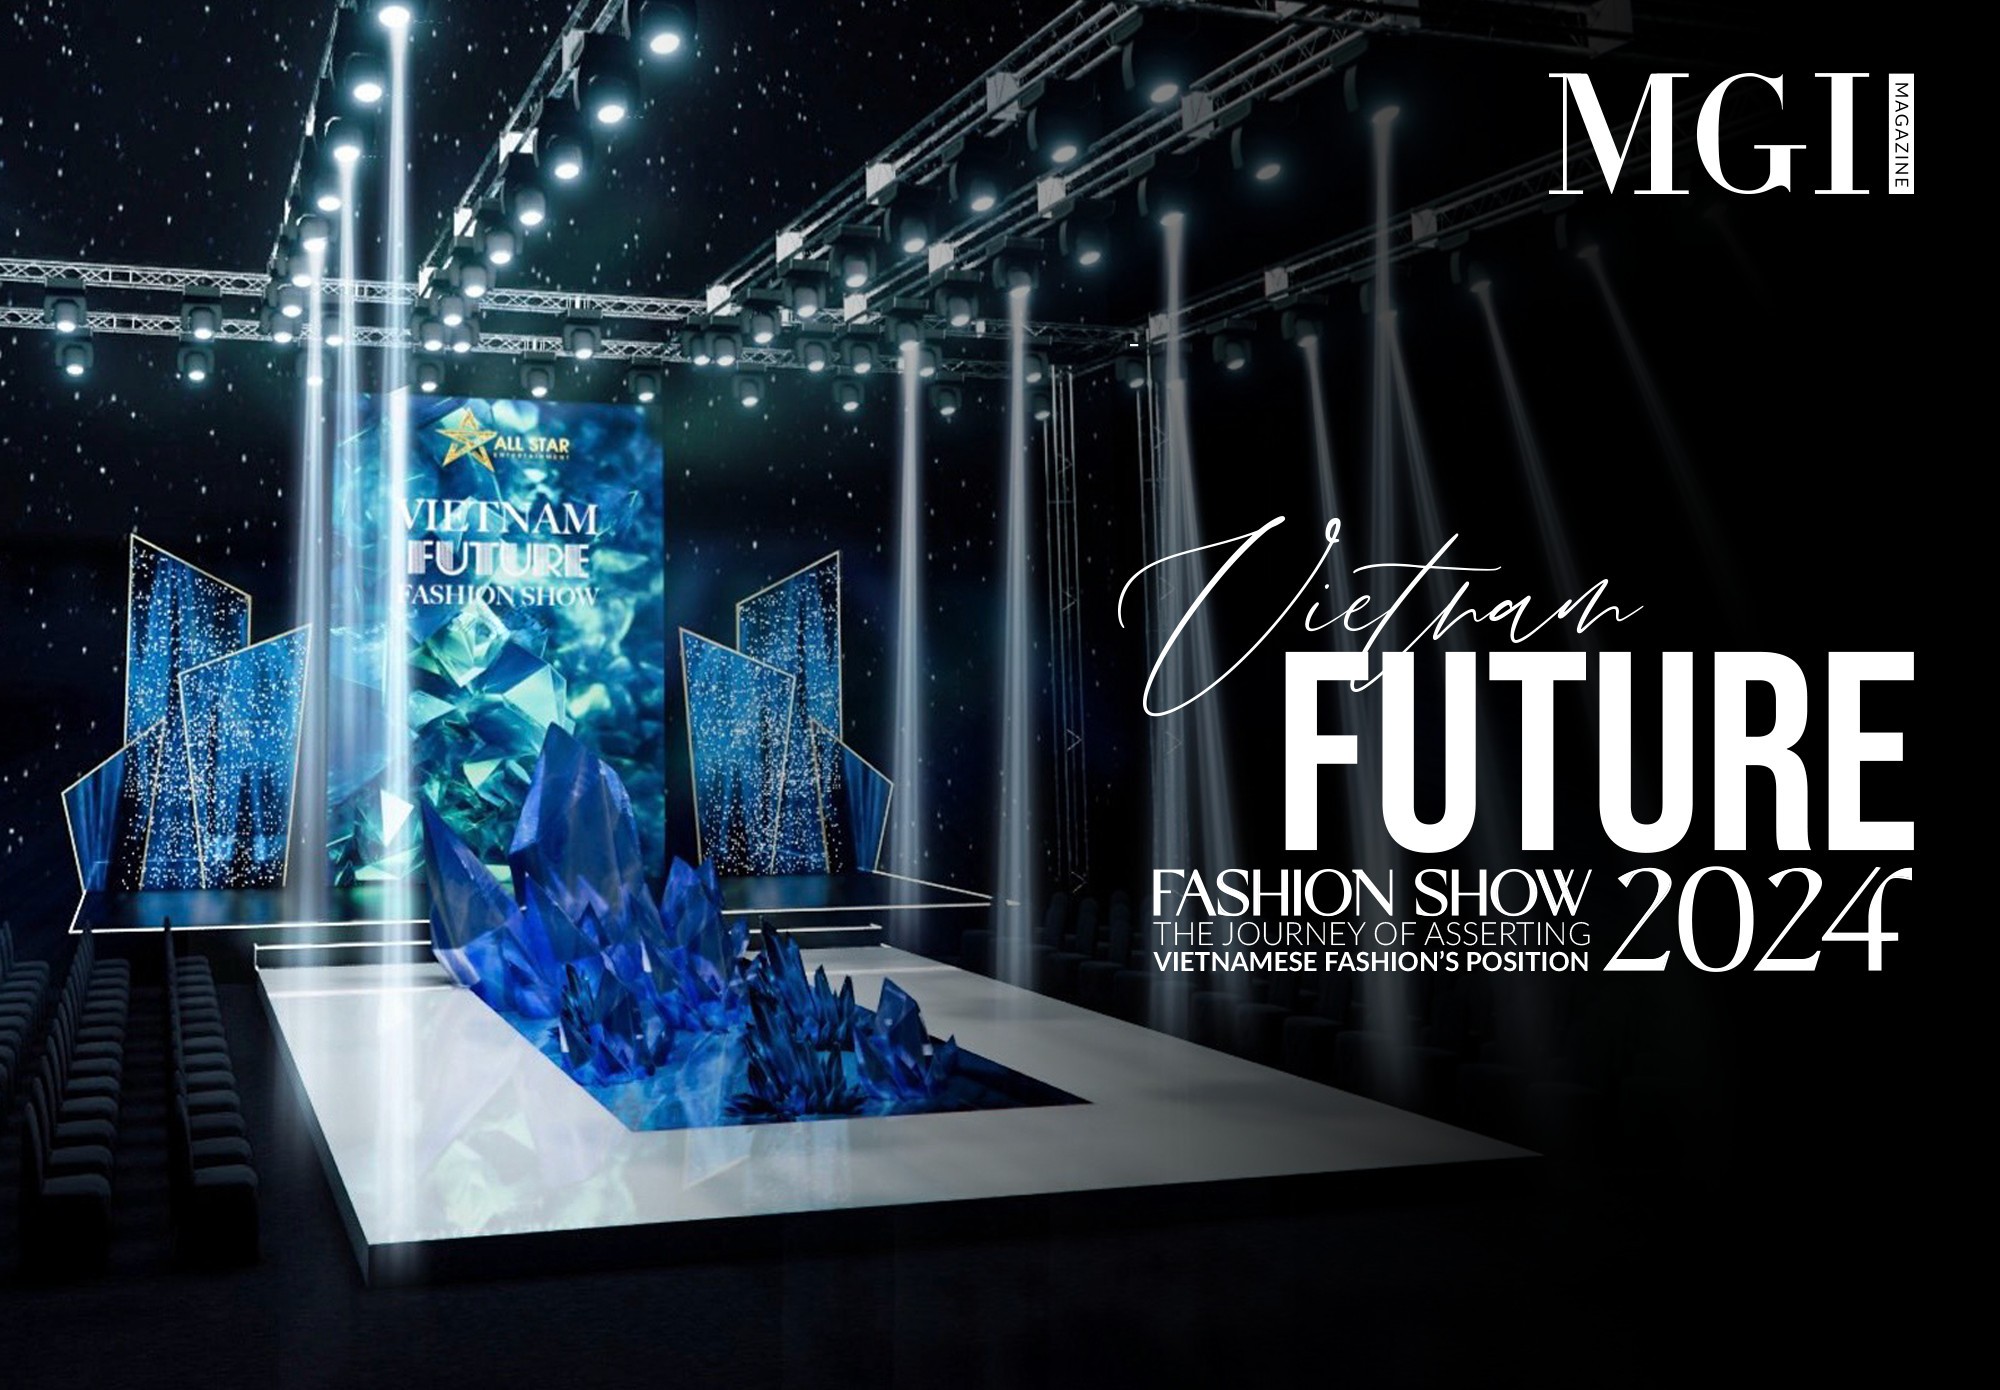 Vietnam Future Fashion Show 2024 - The journey of asserting Vietnamese fashion’s position